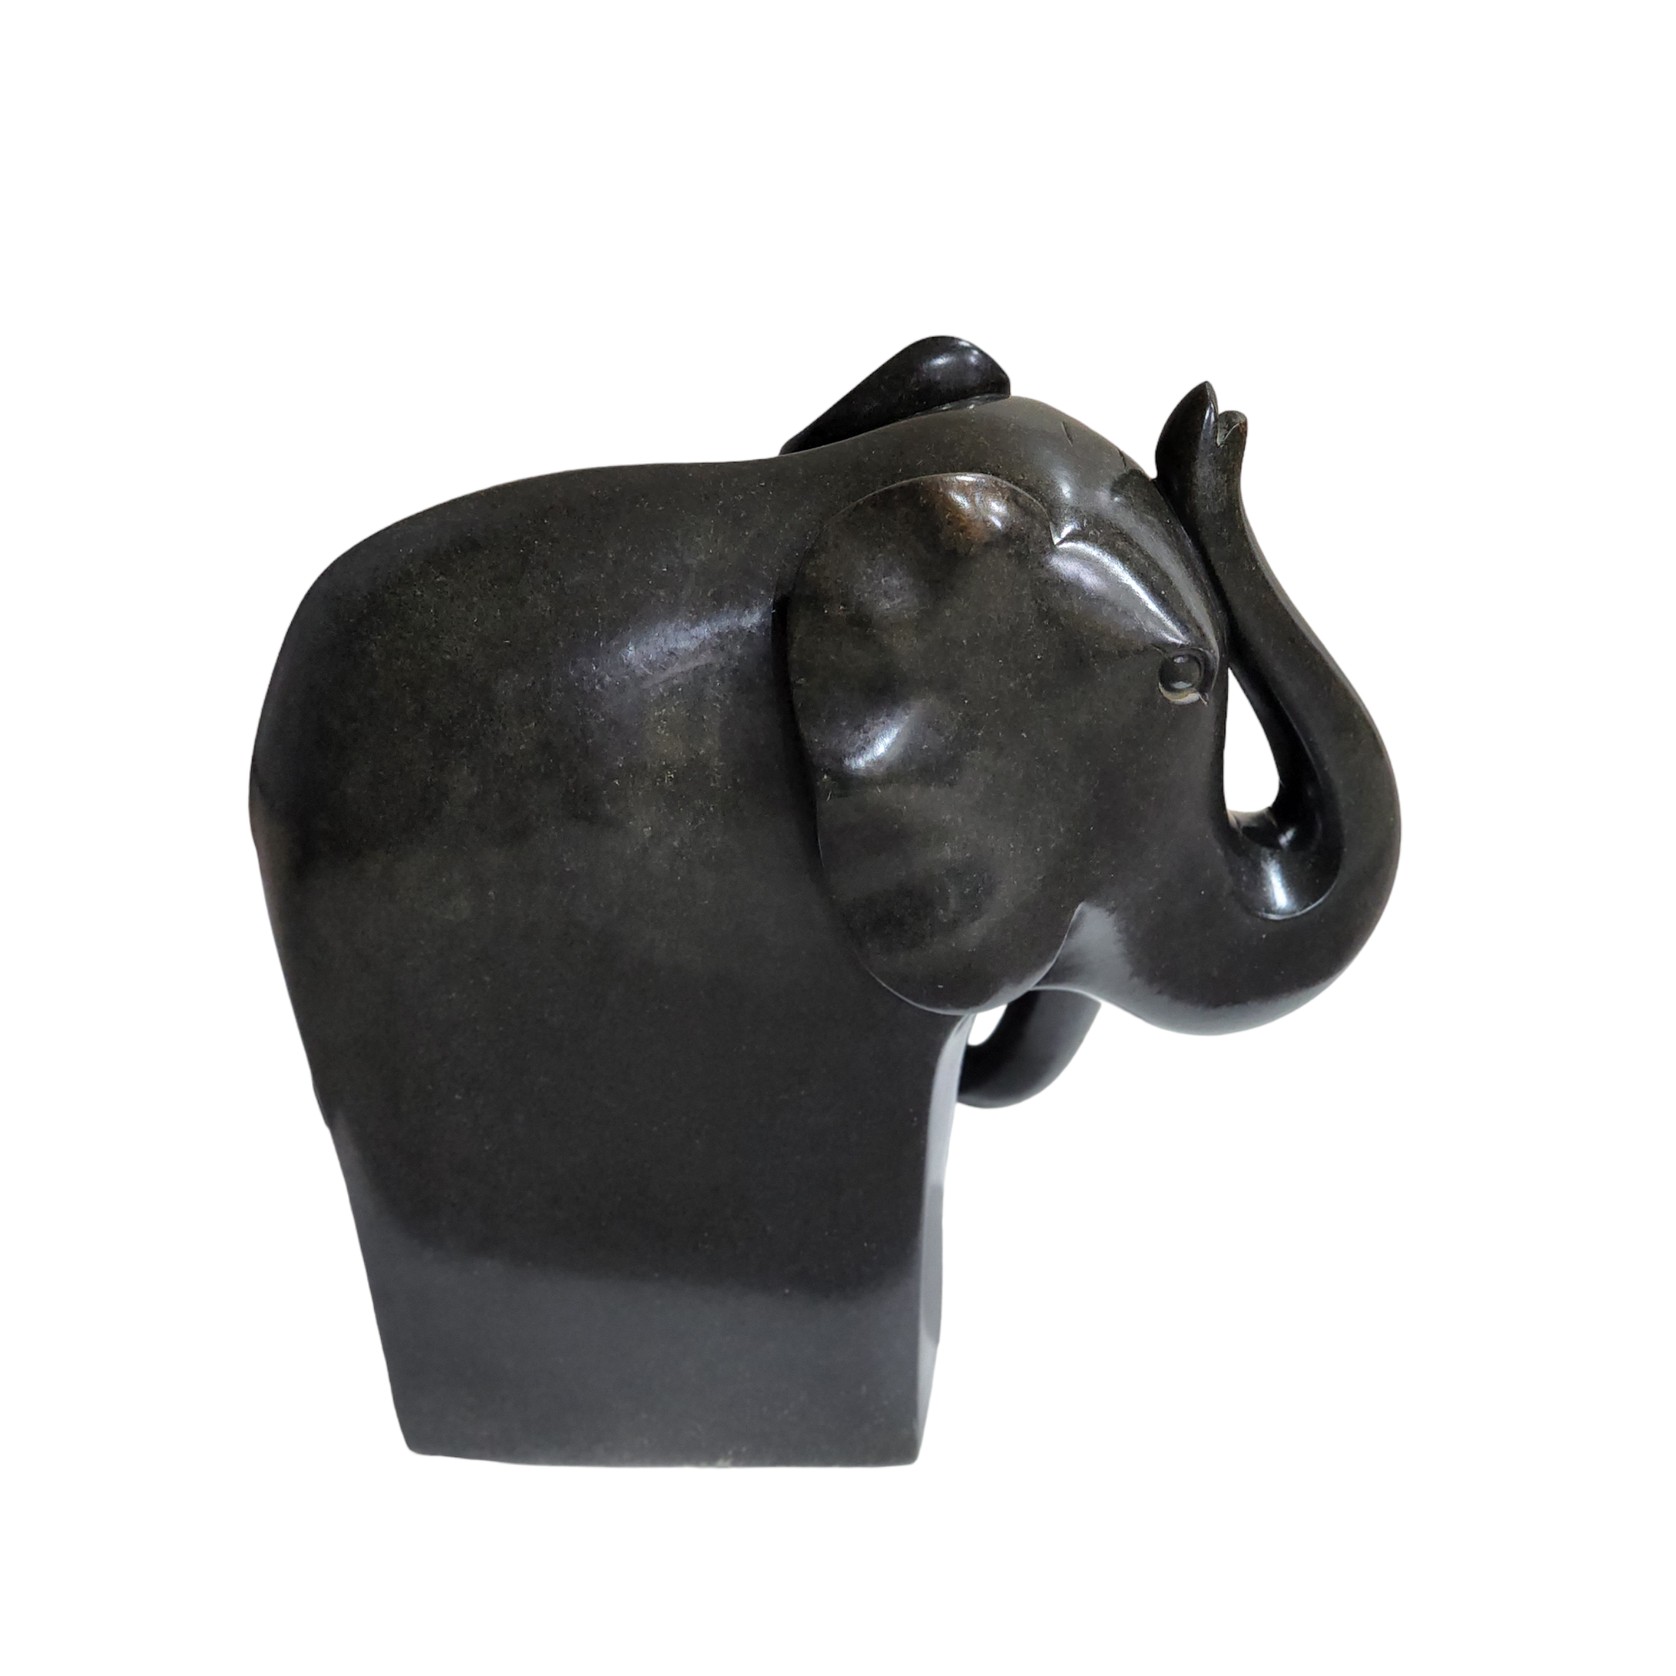 Nzou (Elephant) Sculpture gallery detail image